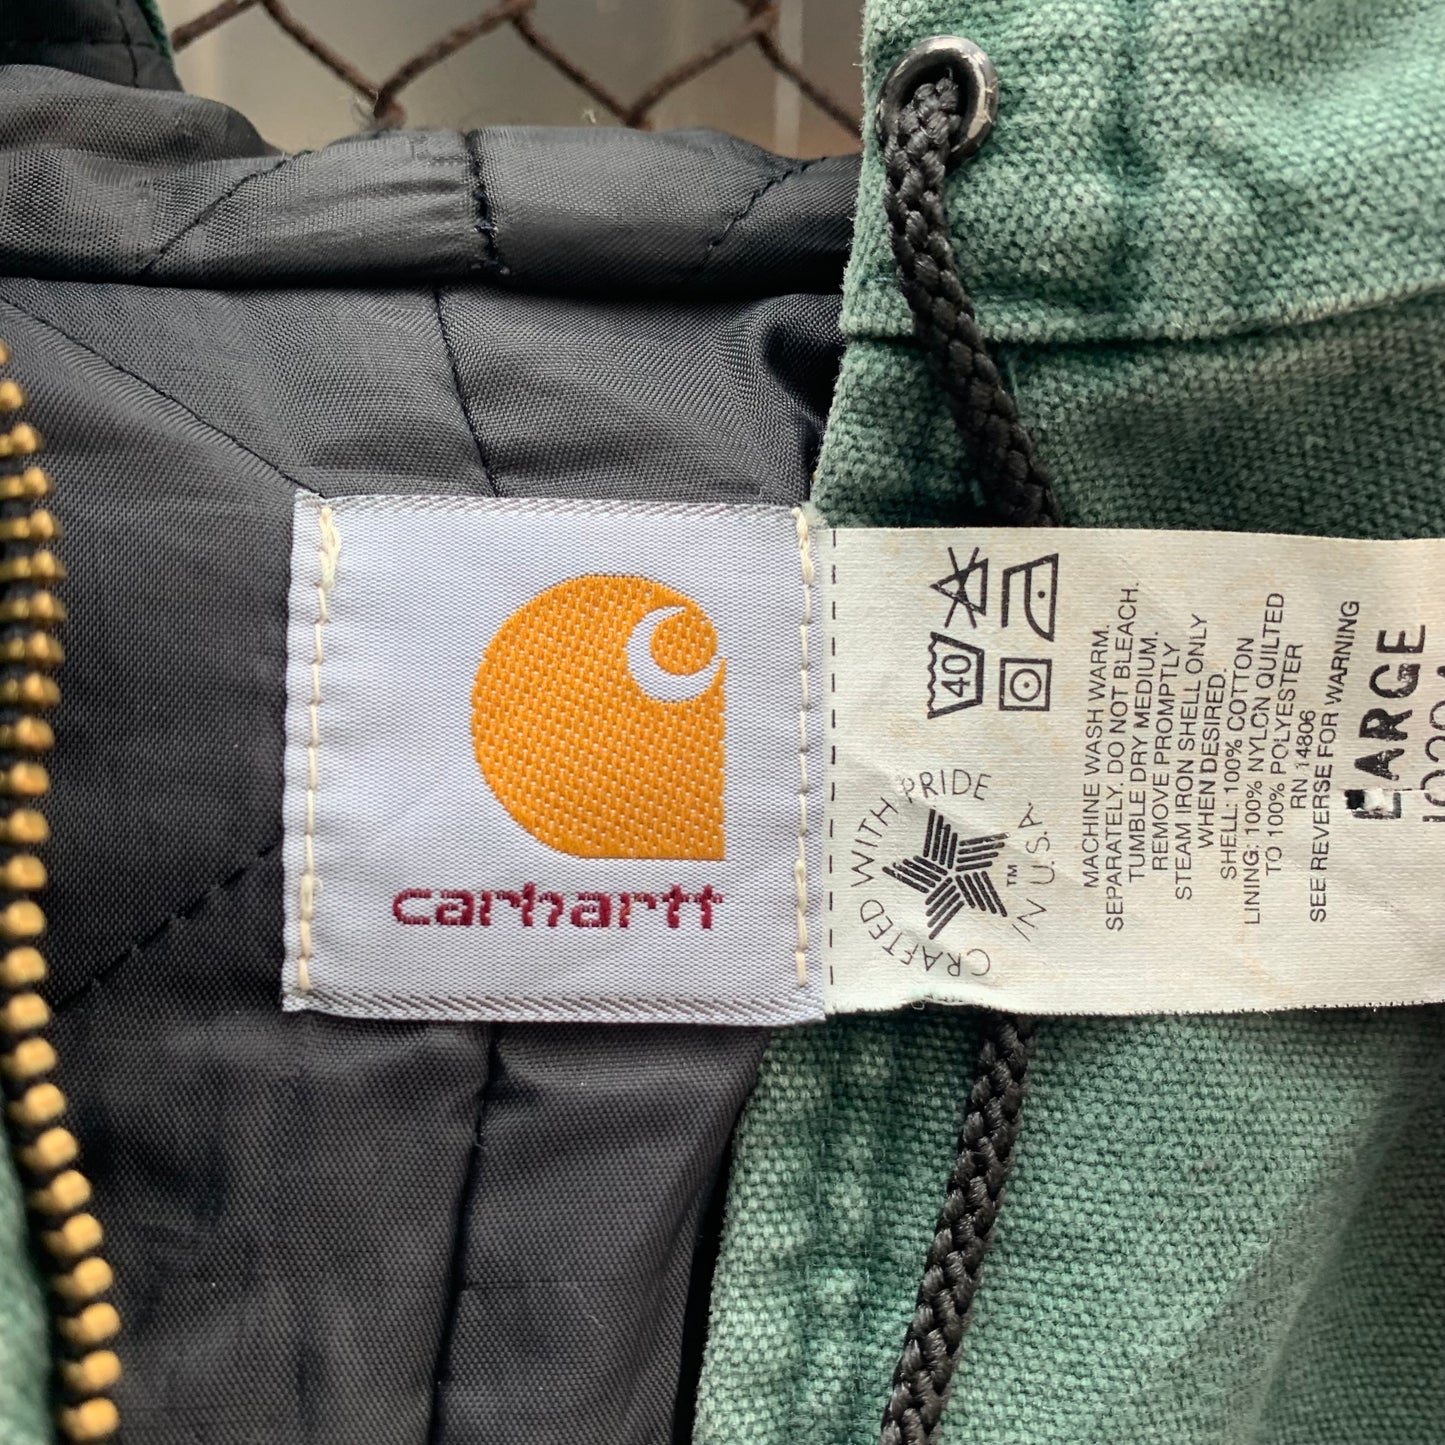 Carhartt Made in USA Green Jacket